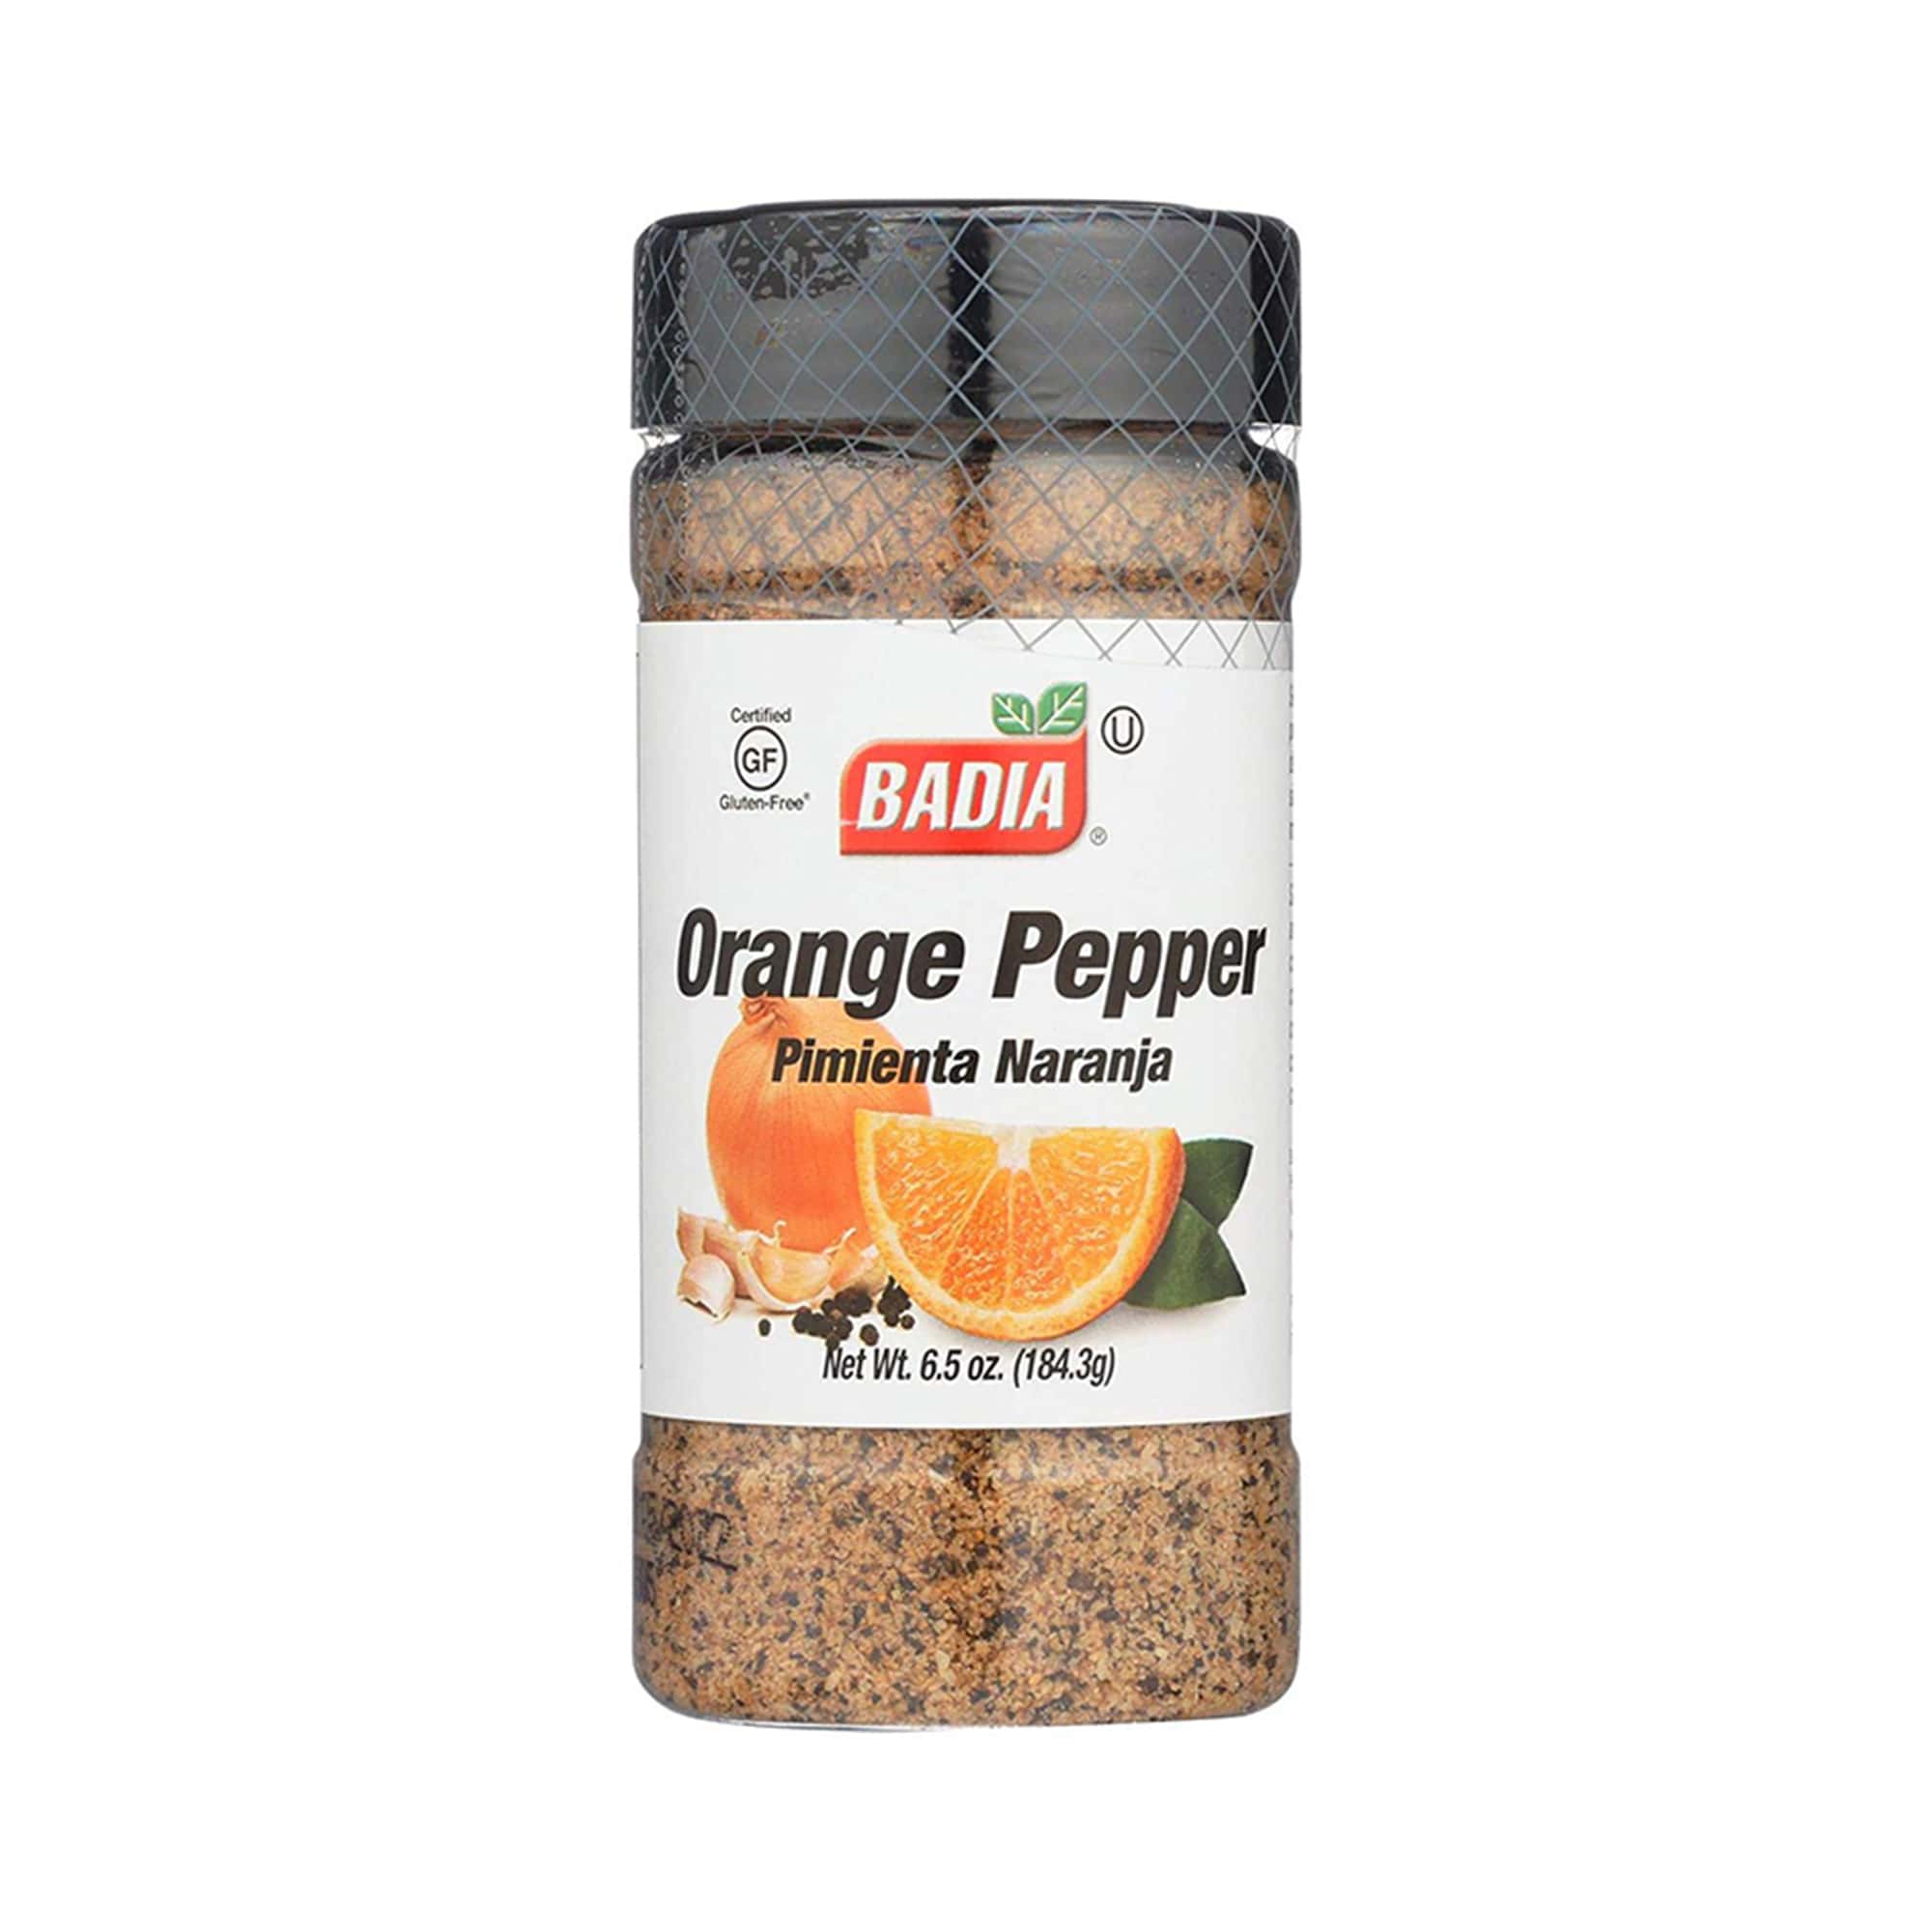 https://americanfoodmart.co.uk/wp-content/uploads/2022/03/Badia-Orange-Pepper-184.3g-6.5oz-min.jpg